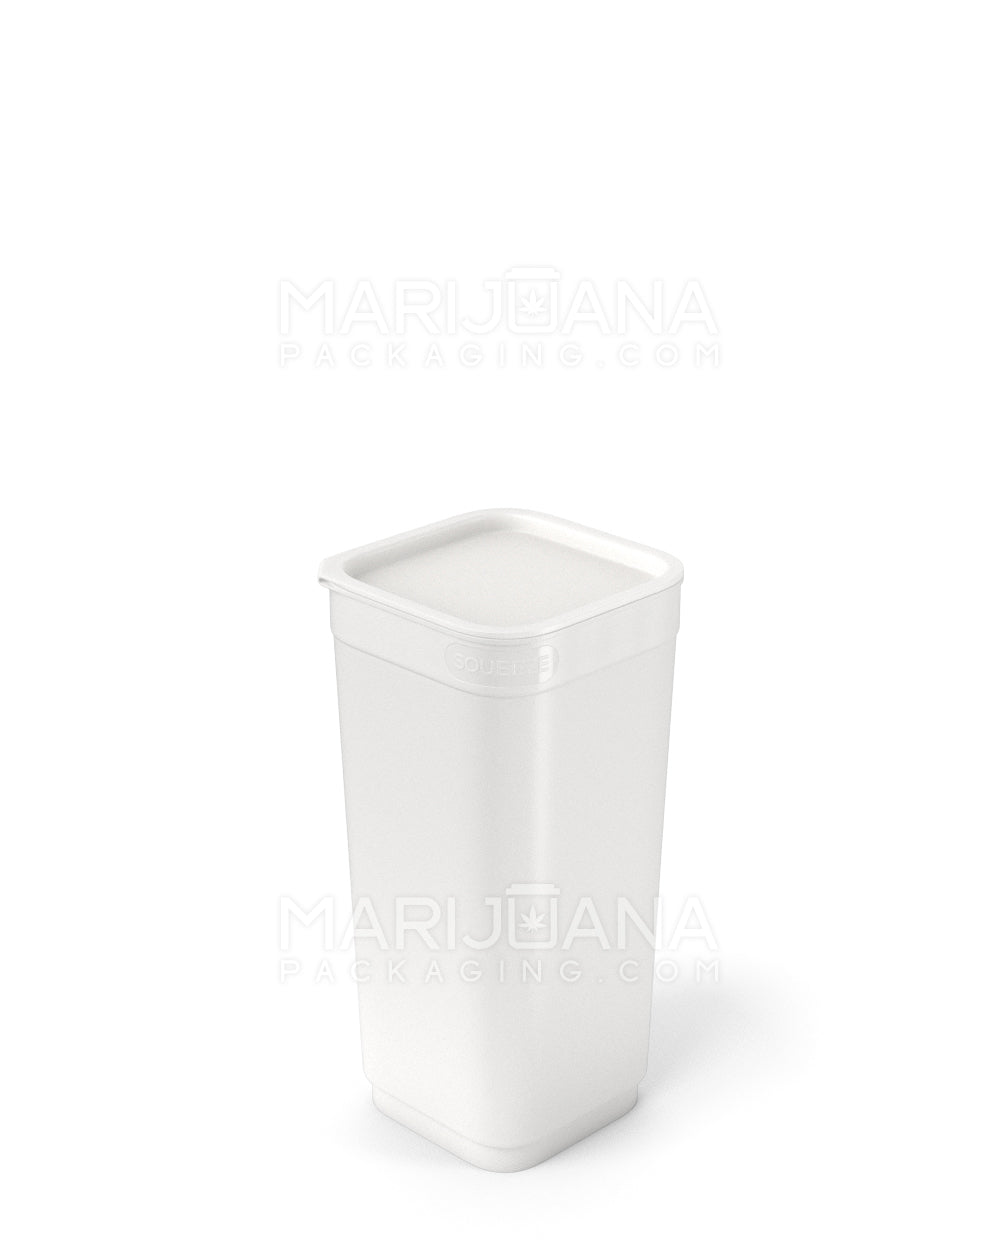 POLLEN GEAR | 100% Recyclable Opaque White Pop Box Pop Top Bottles | 30dr - 7g - 373 Count - 5